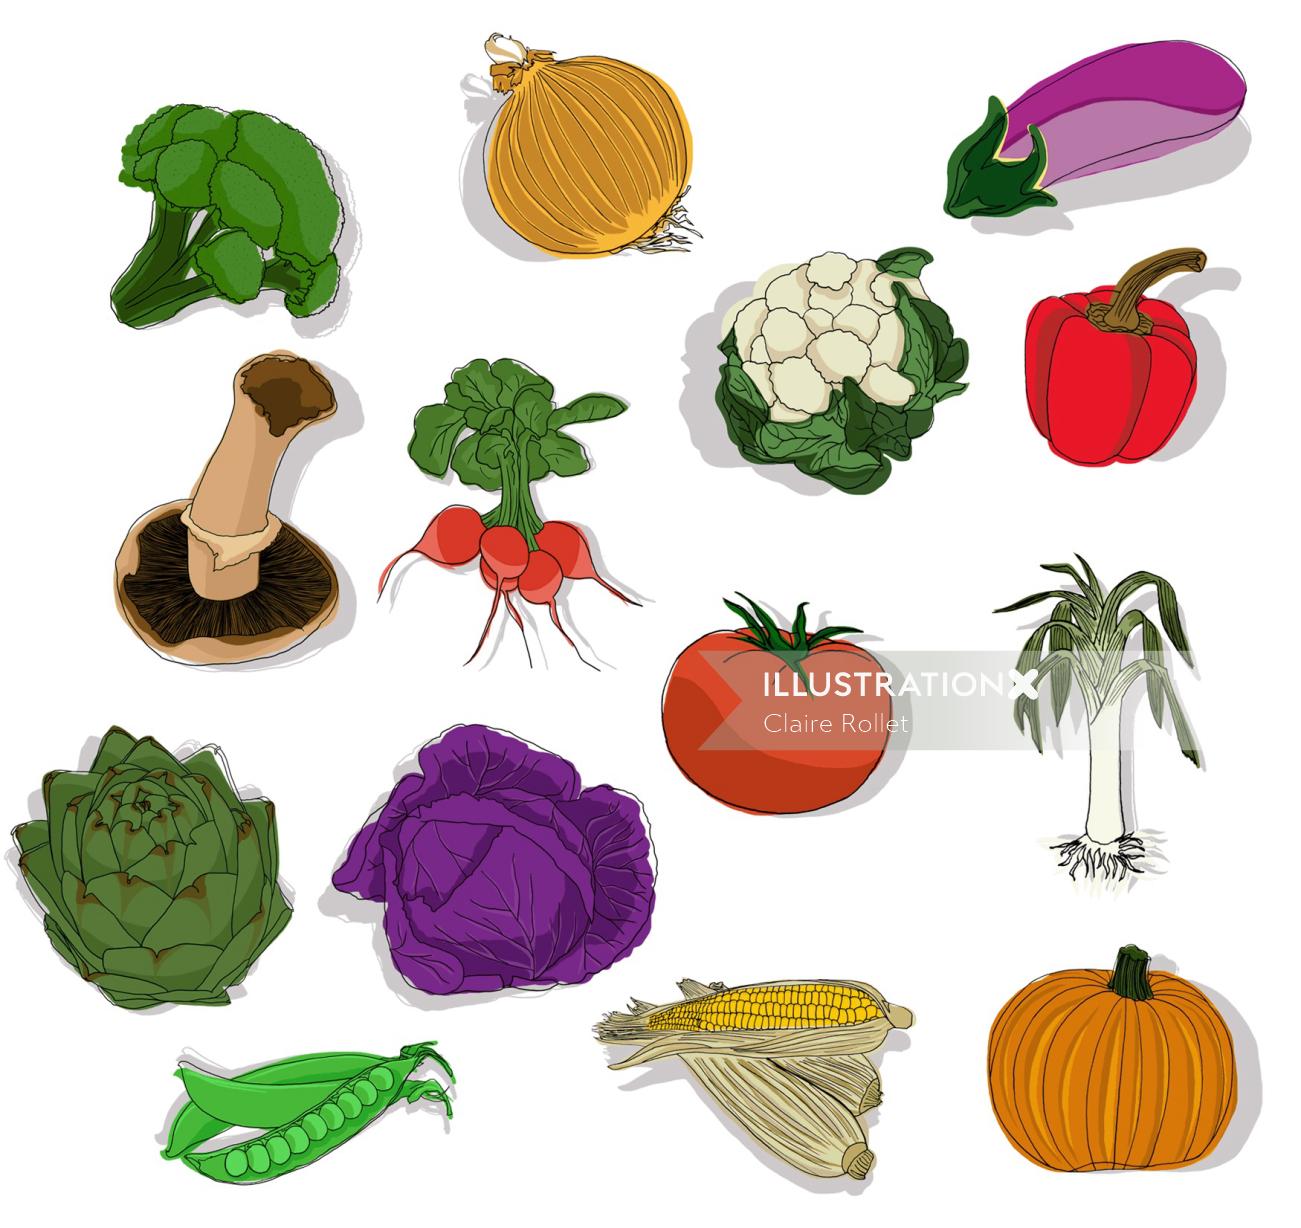 Verduras ilustradas por Claire Rollet